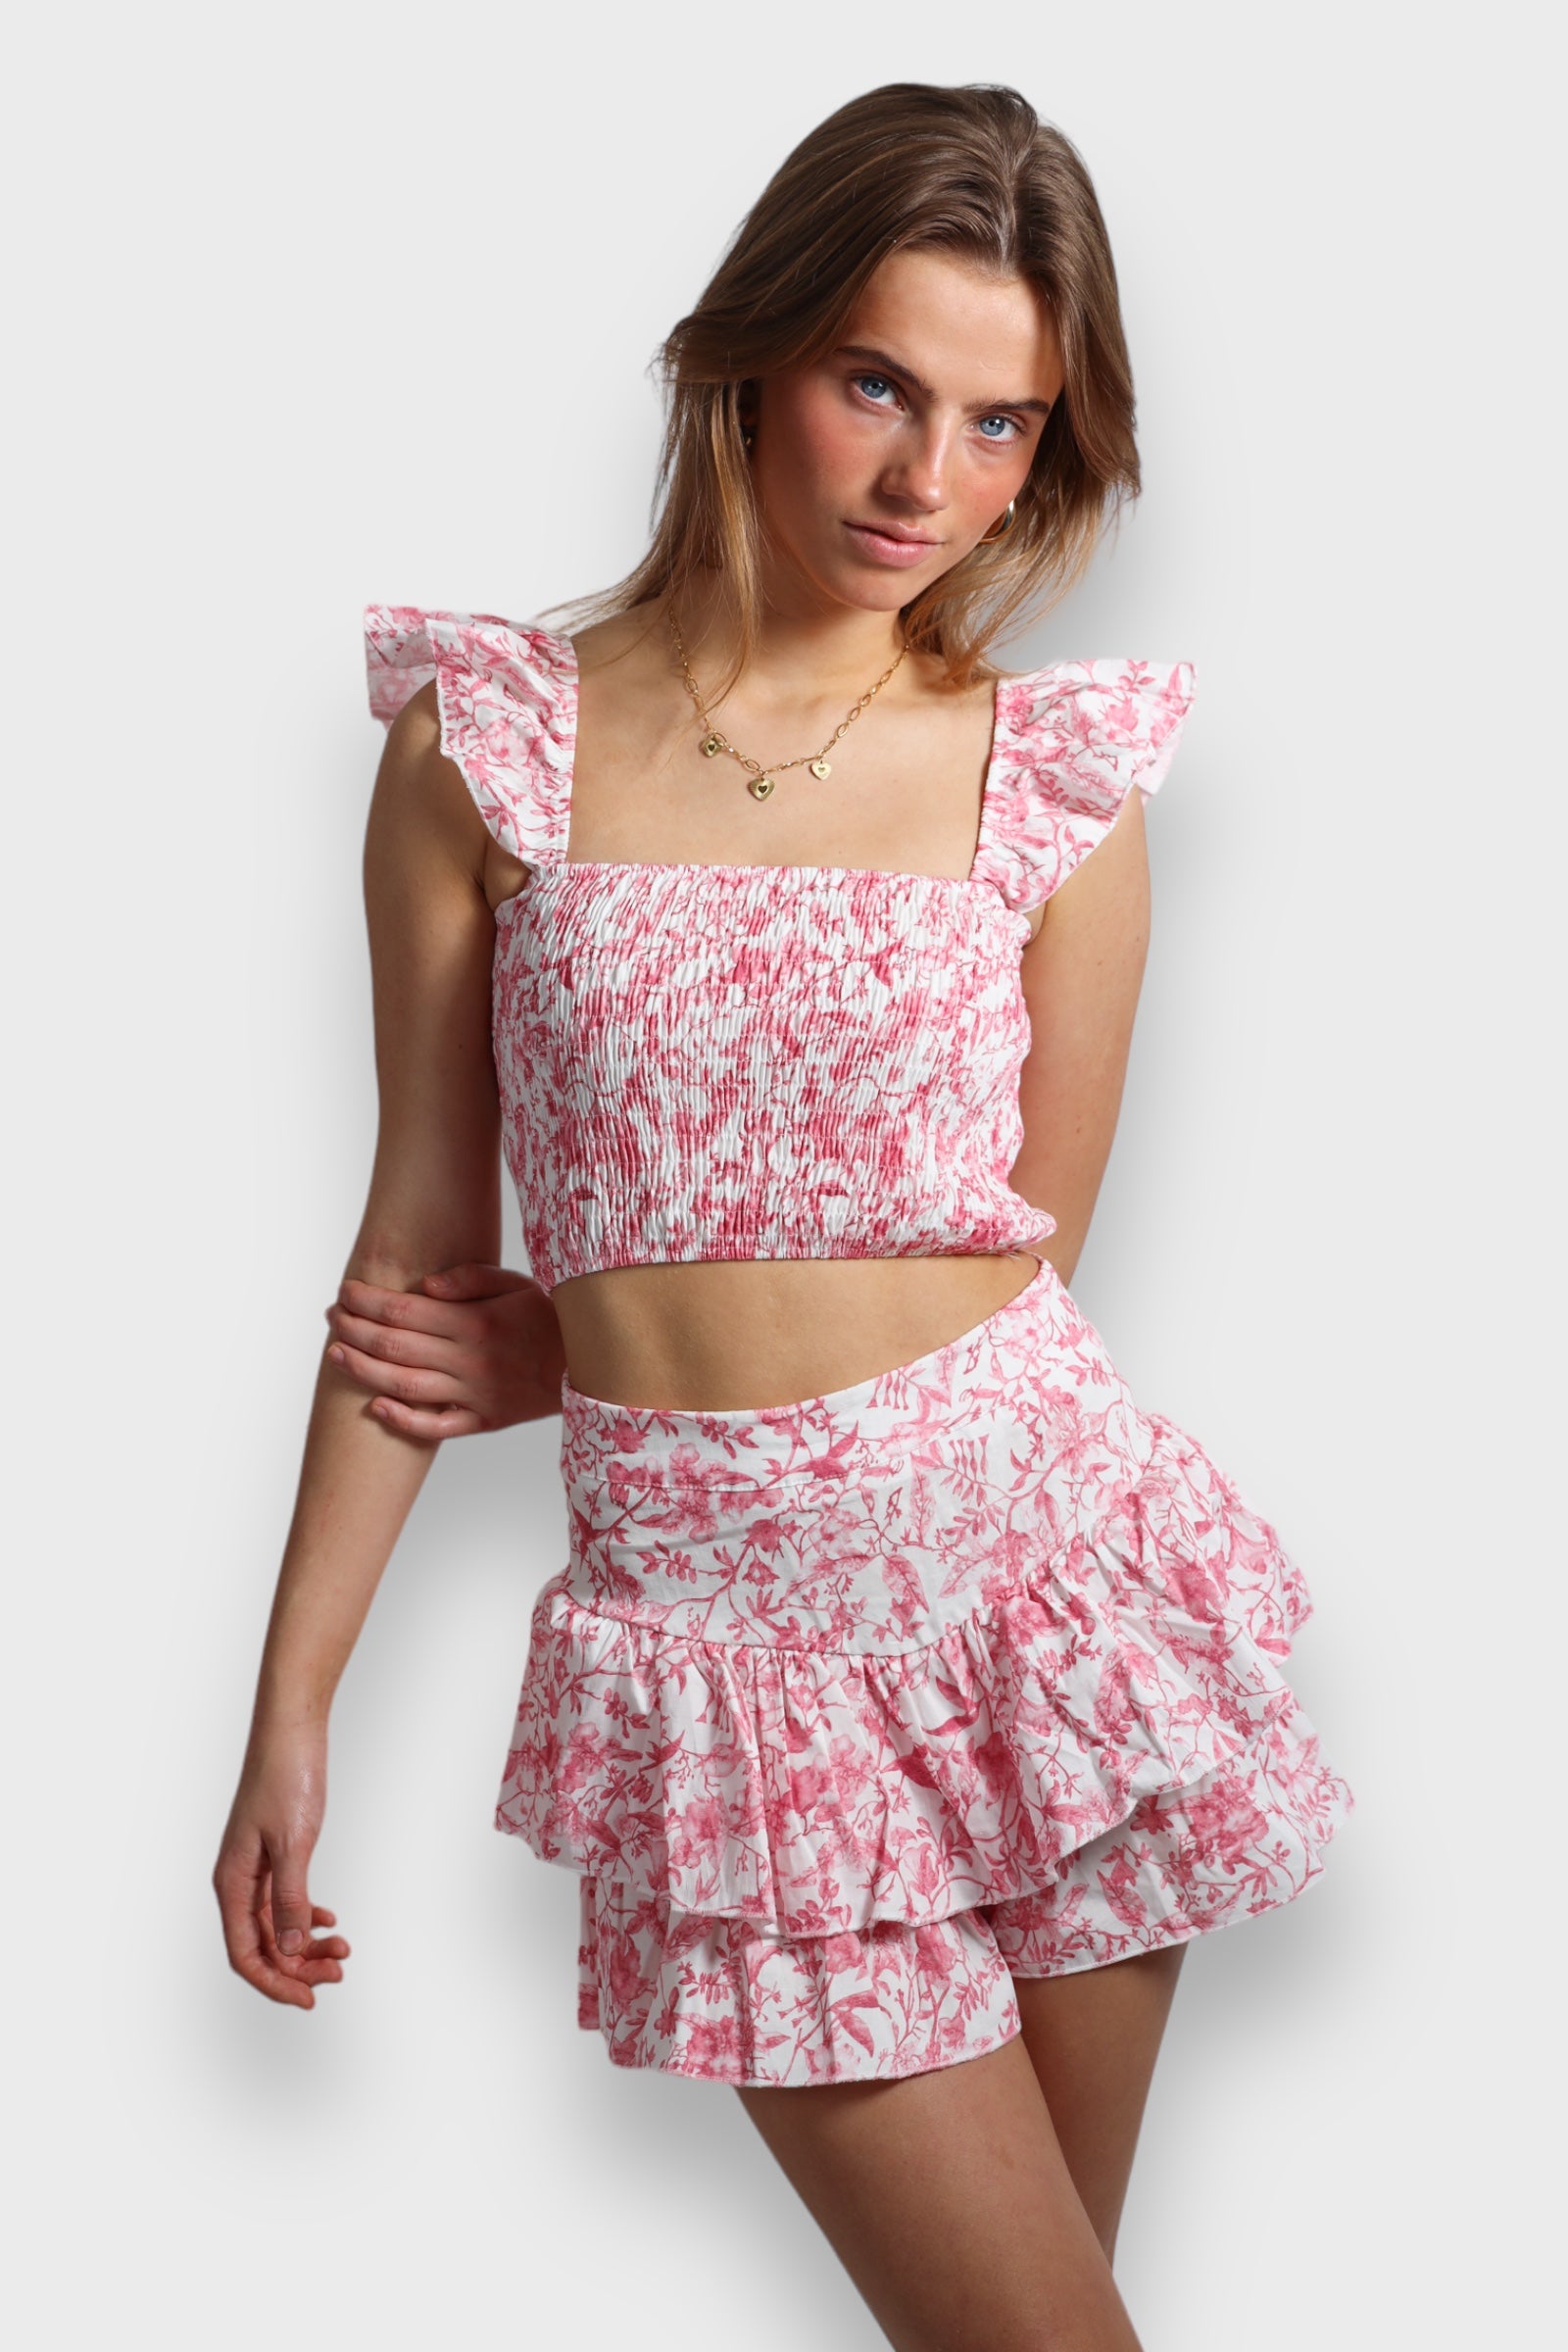 "Flower" skirt pink